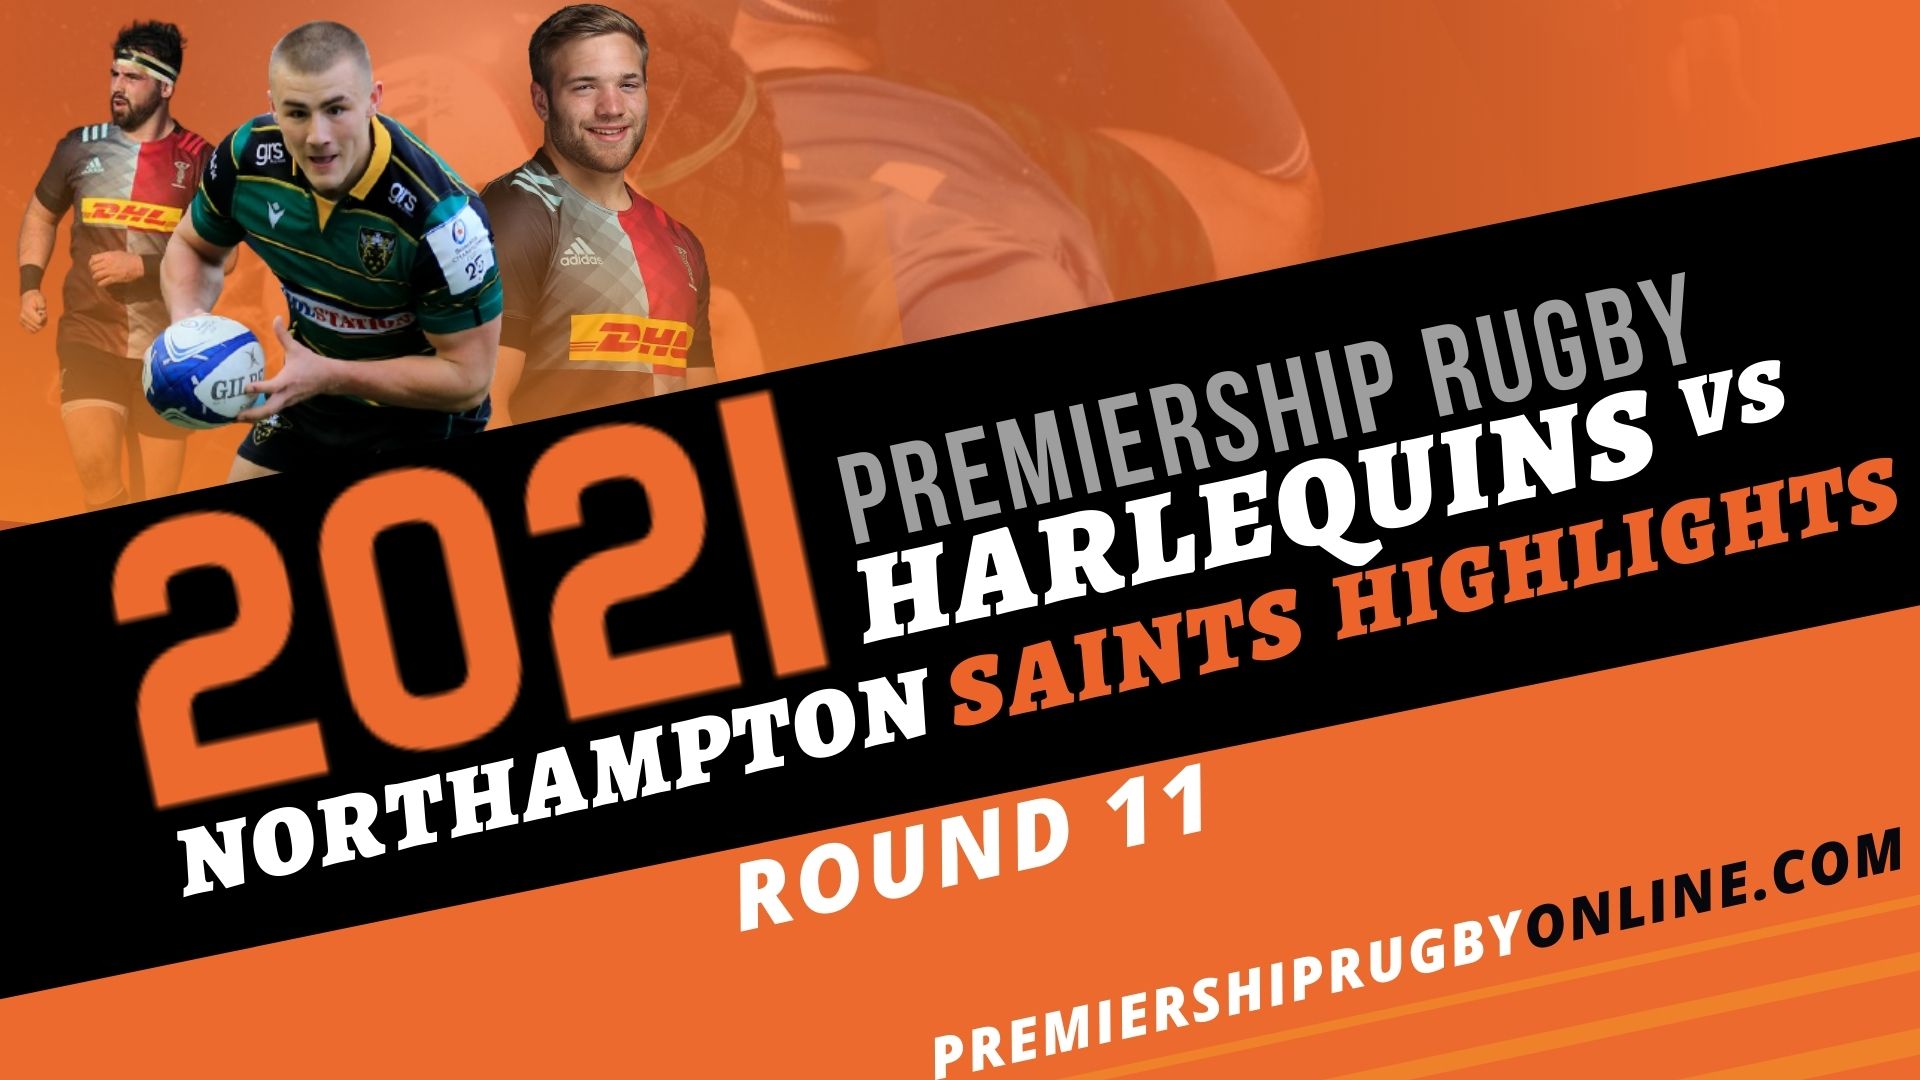 Harlequins Vs Northampton Saints Highlights 2021 RD 11